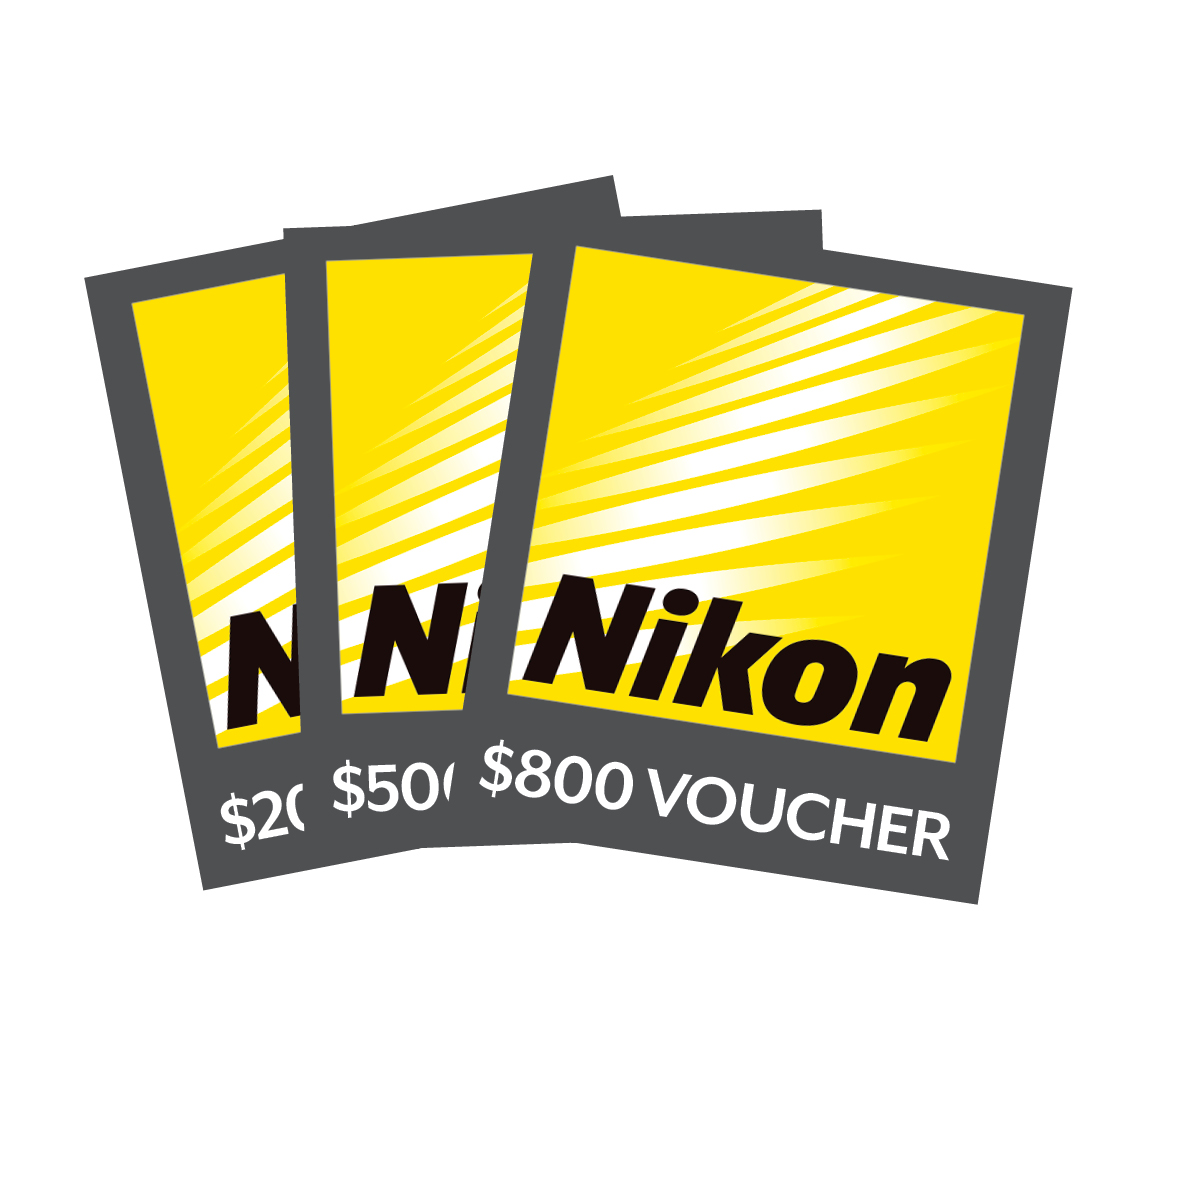 Travel, sponsored by Nikon